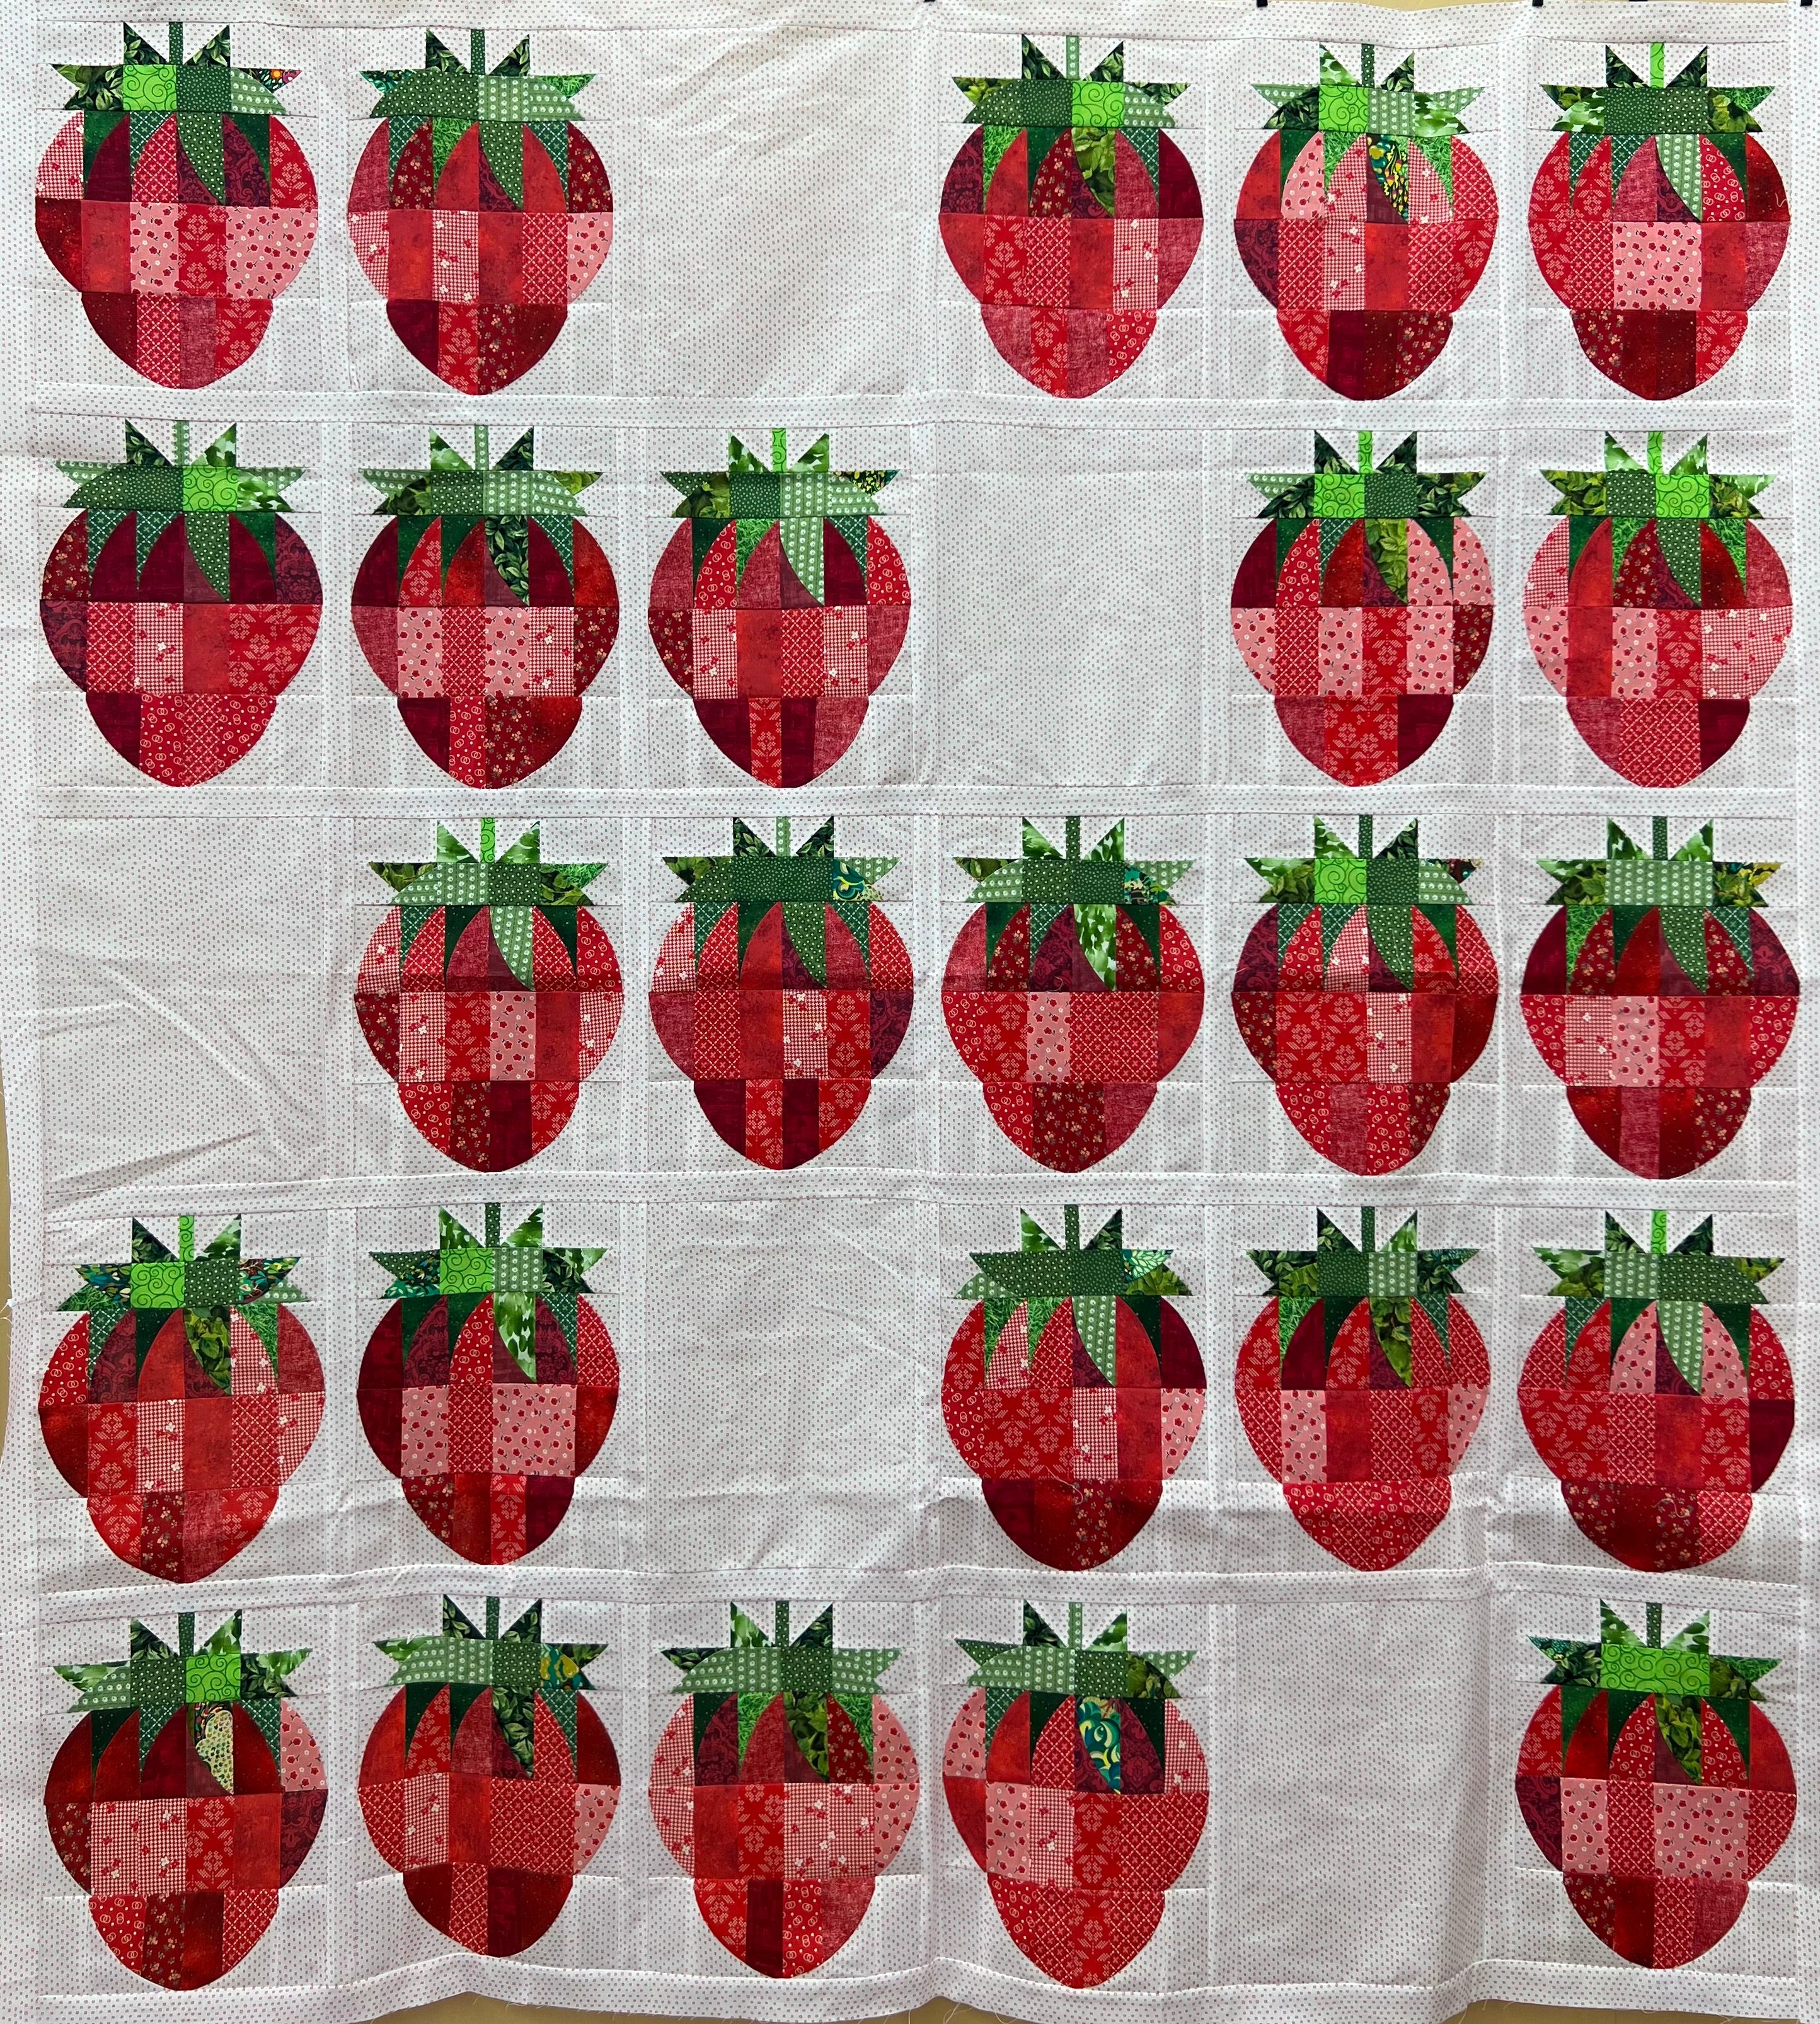 Mod Strawberries Kit - Store Made